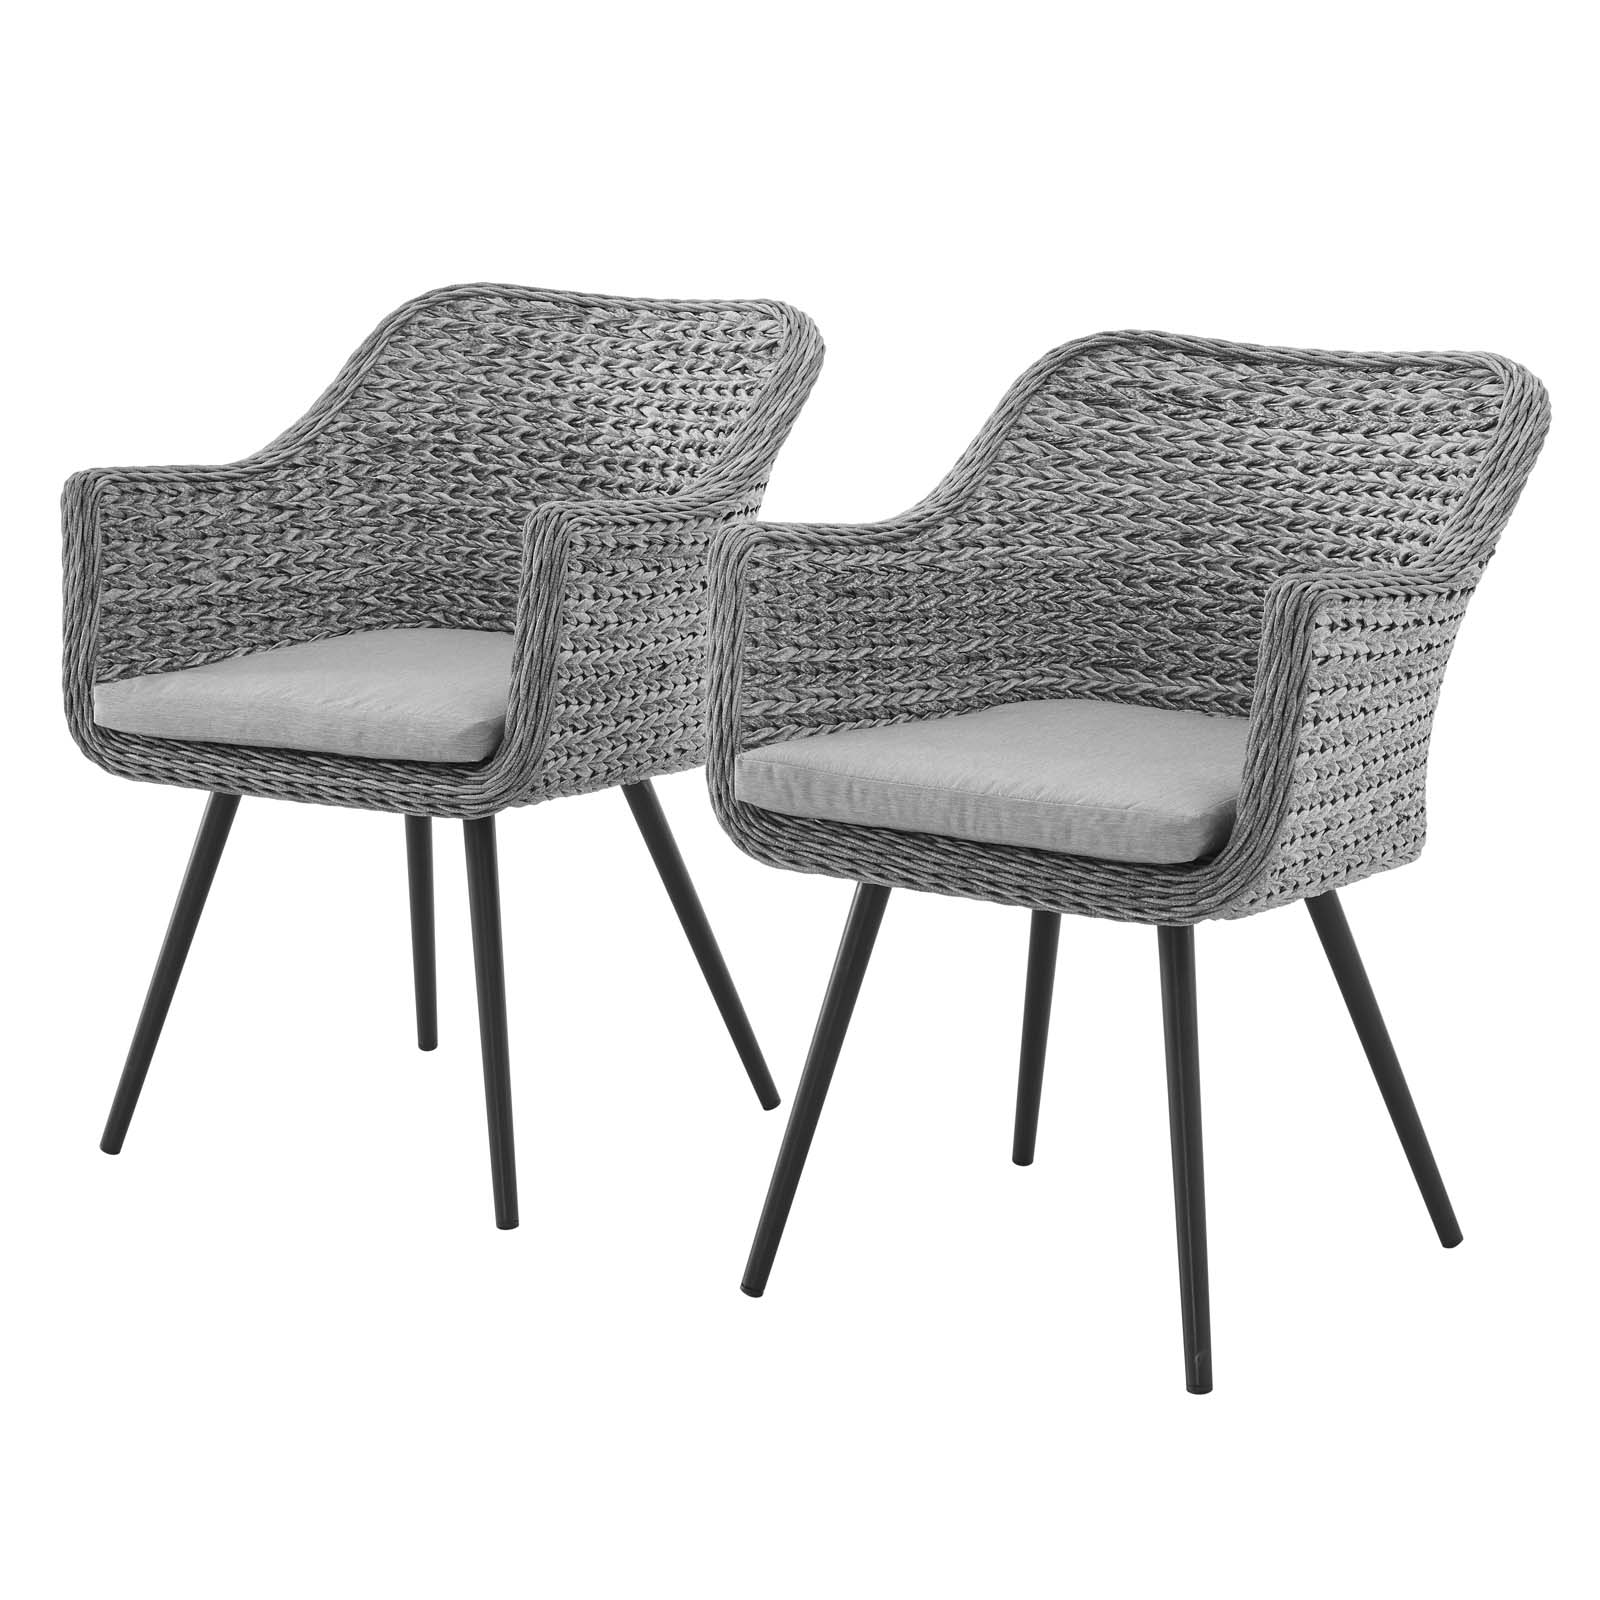 Modern Contemporary Urban Design Outdoor Patio Balcony Garden Furniture Lounge Chair Armchair, Set of Two, Rattan Wicker, Grey Gray - image 1 of 6